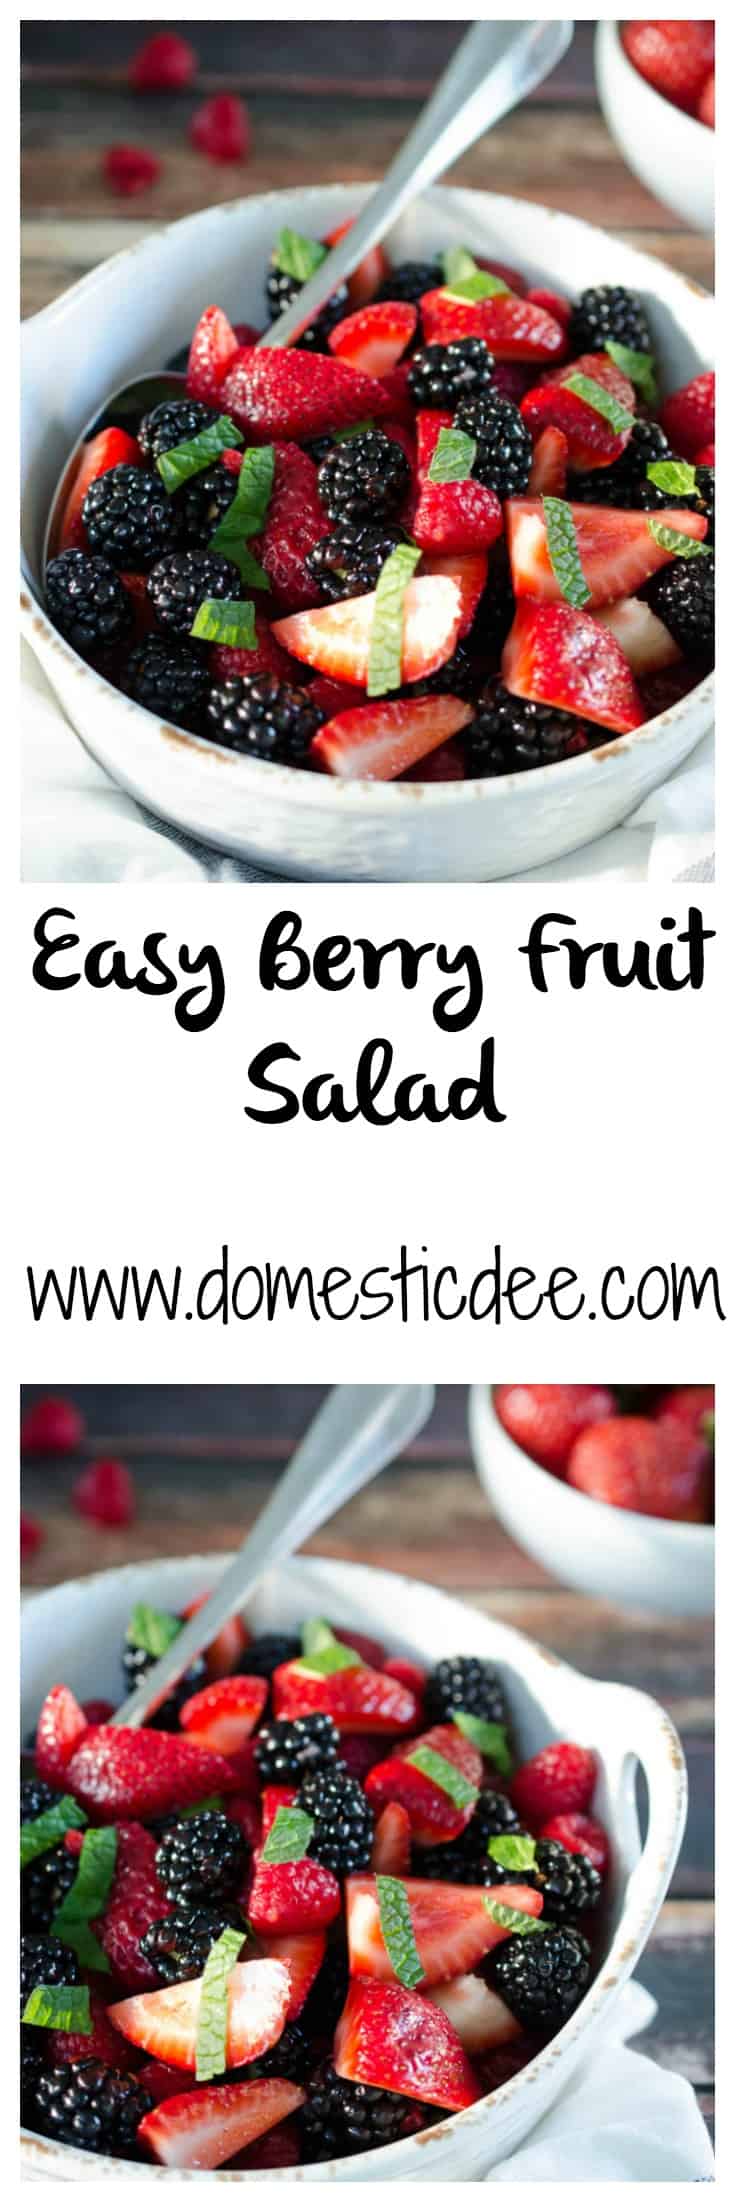 Easy Berry Fruit Salad